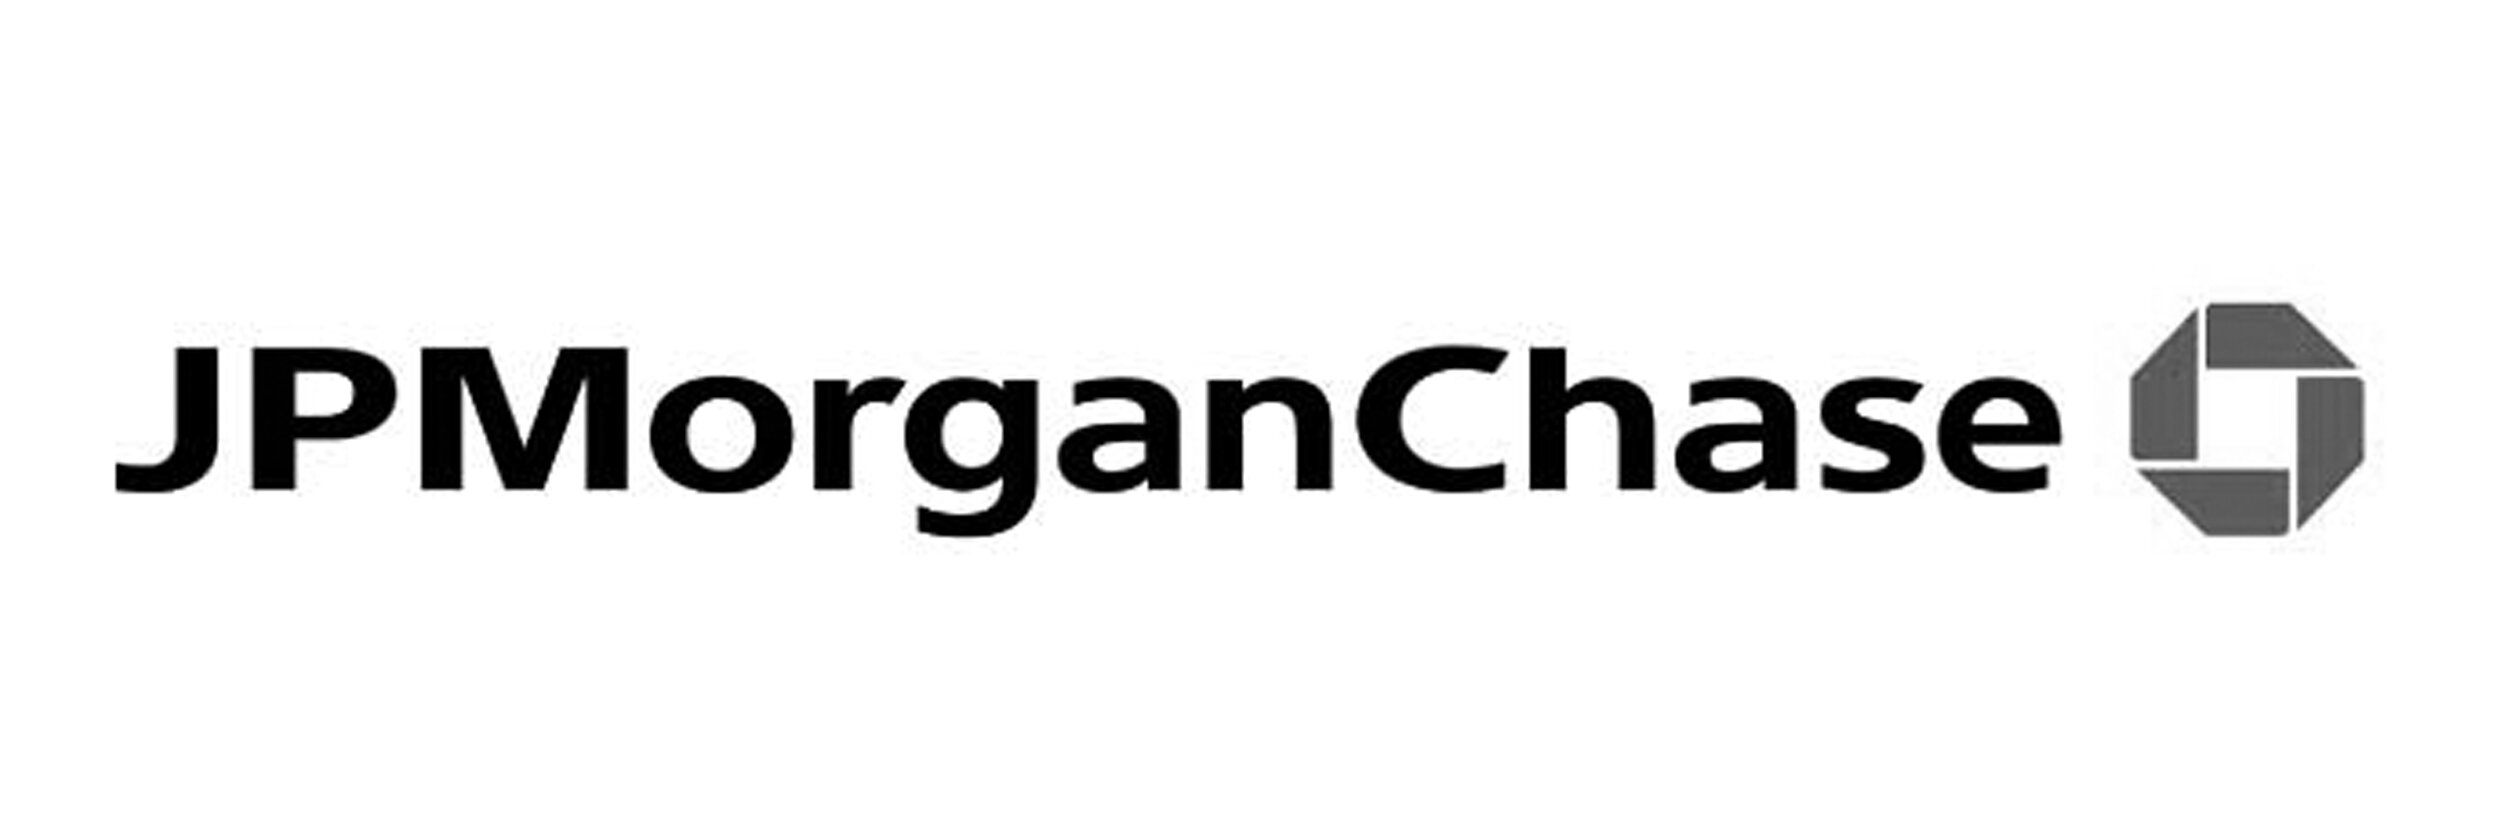 MGC JPmorgan logo.jpg